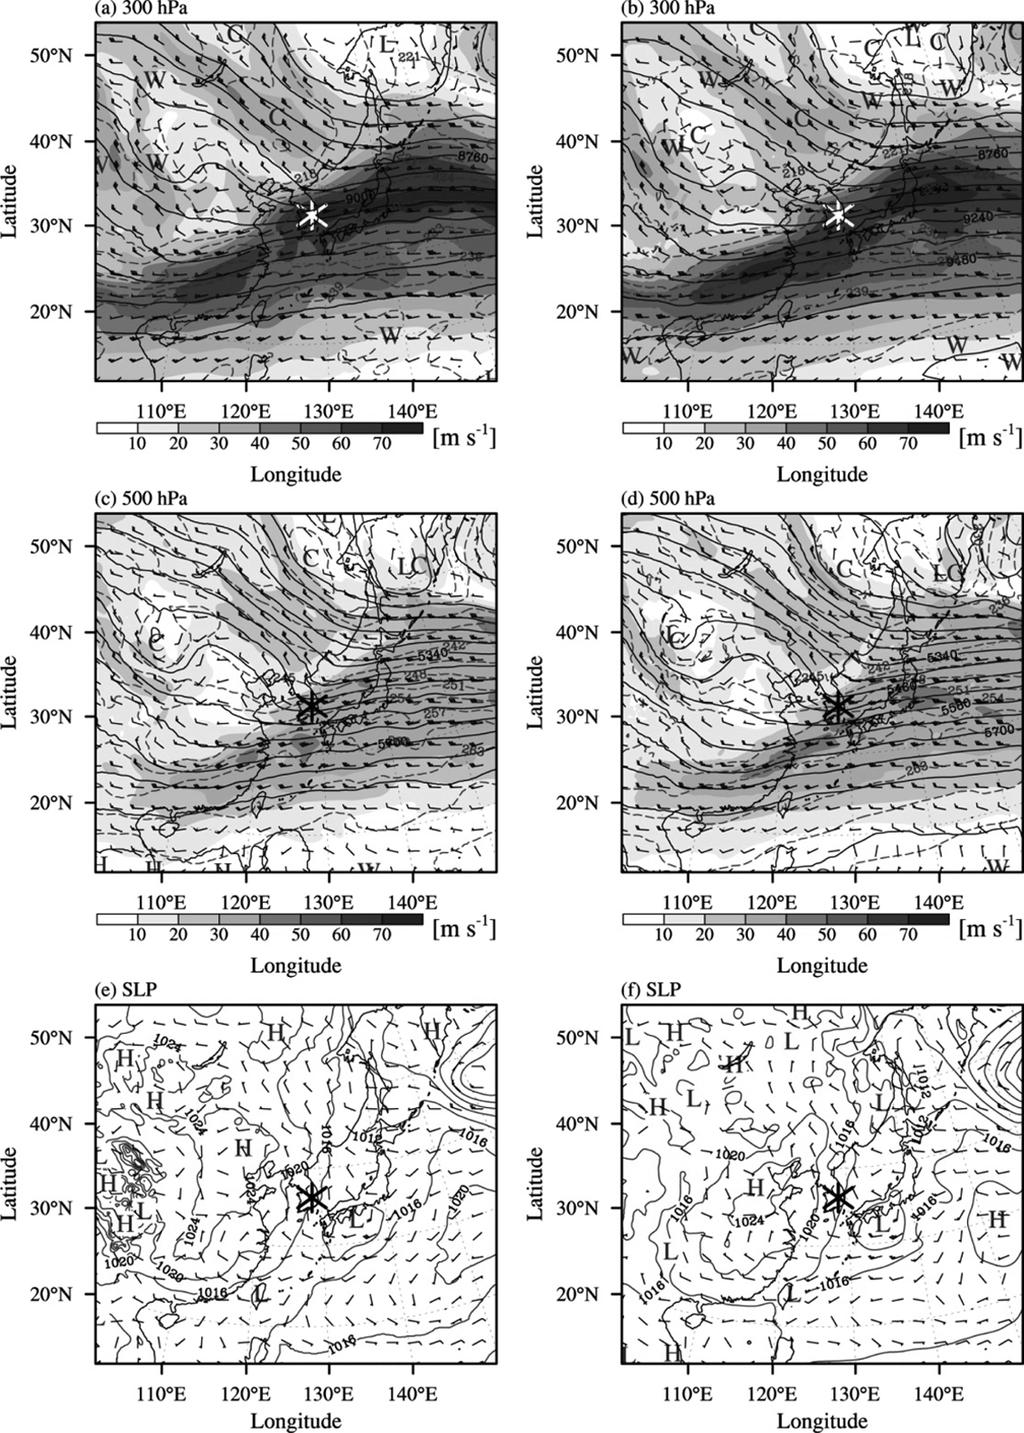 2 except at 00 UTC 16 Feb 2003. 트류가 한반도를 가로지르고 있으며, 500 hpa에서는 한반도에 장파 기압골이 위치하여 그 풍하측에서는 서풍이, 풍상측에서는 북서풍이 나타난다.